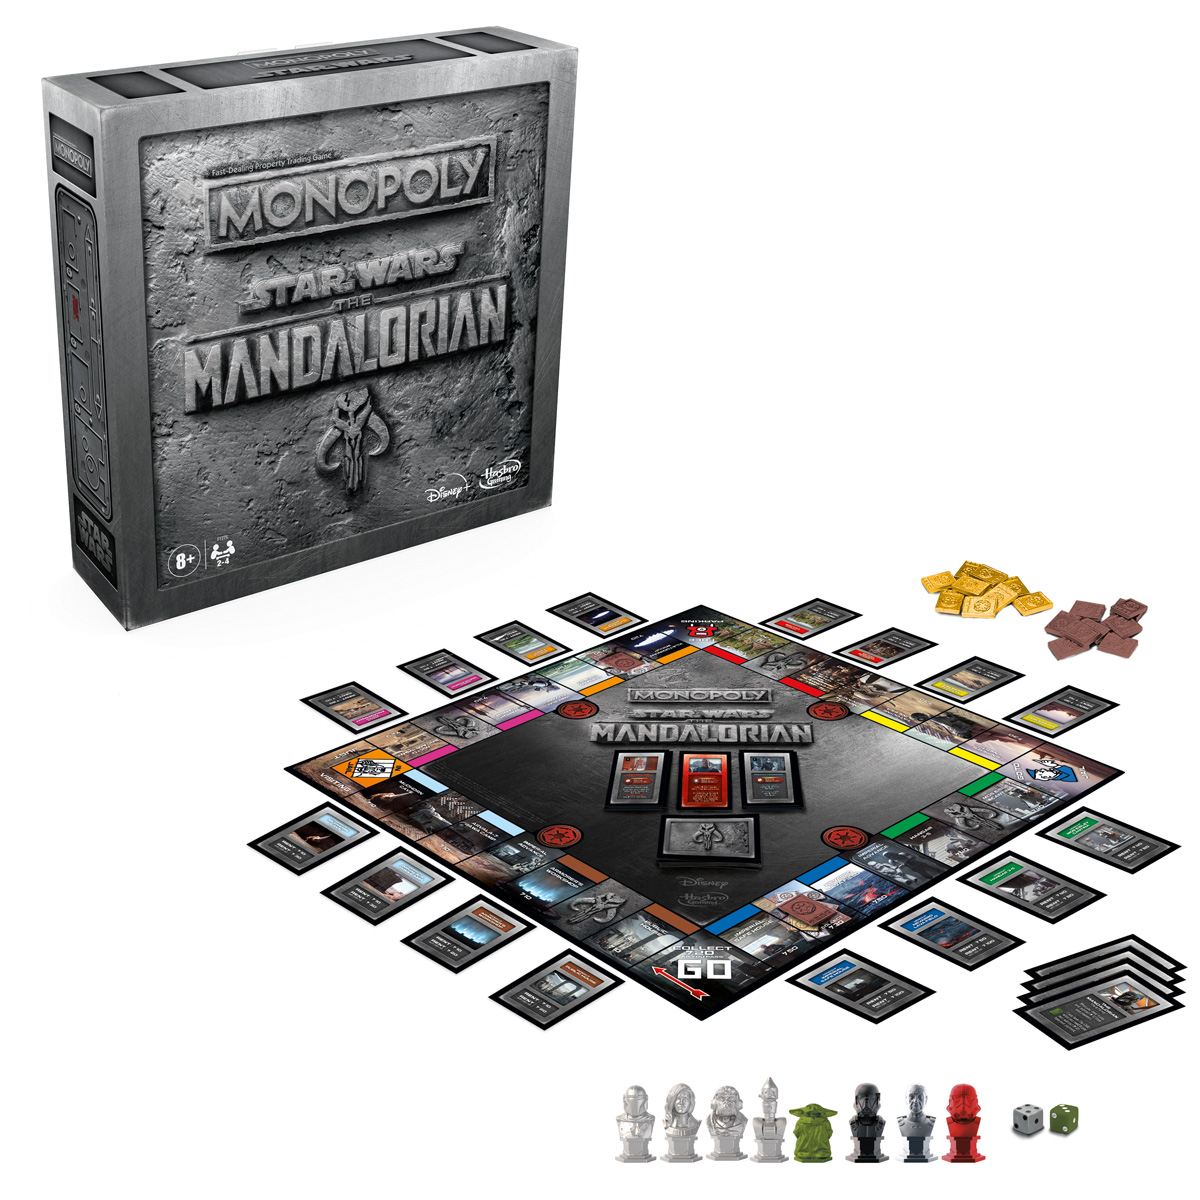 Monopoly Star Wars The Mandalorian Edition